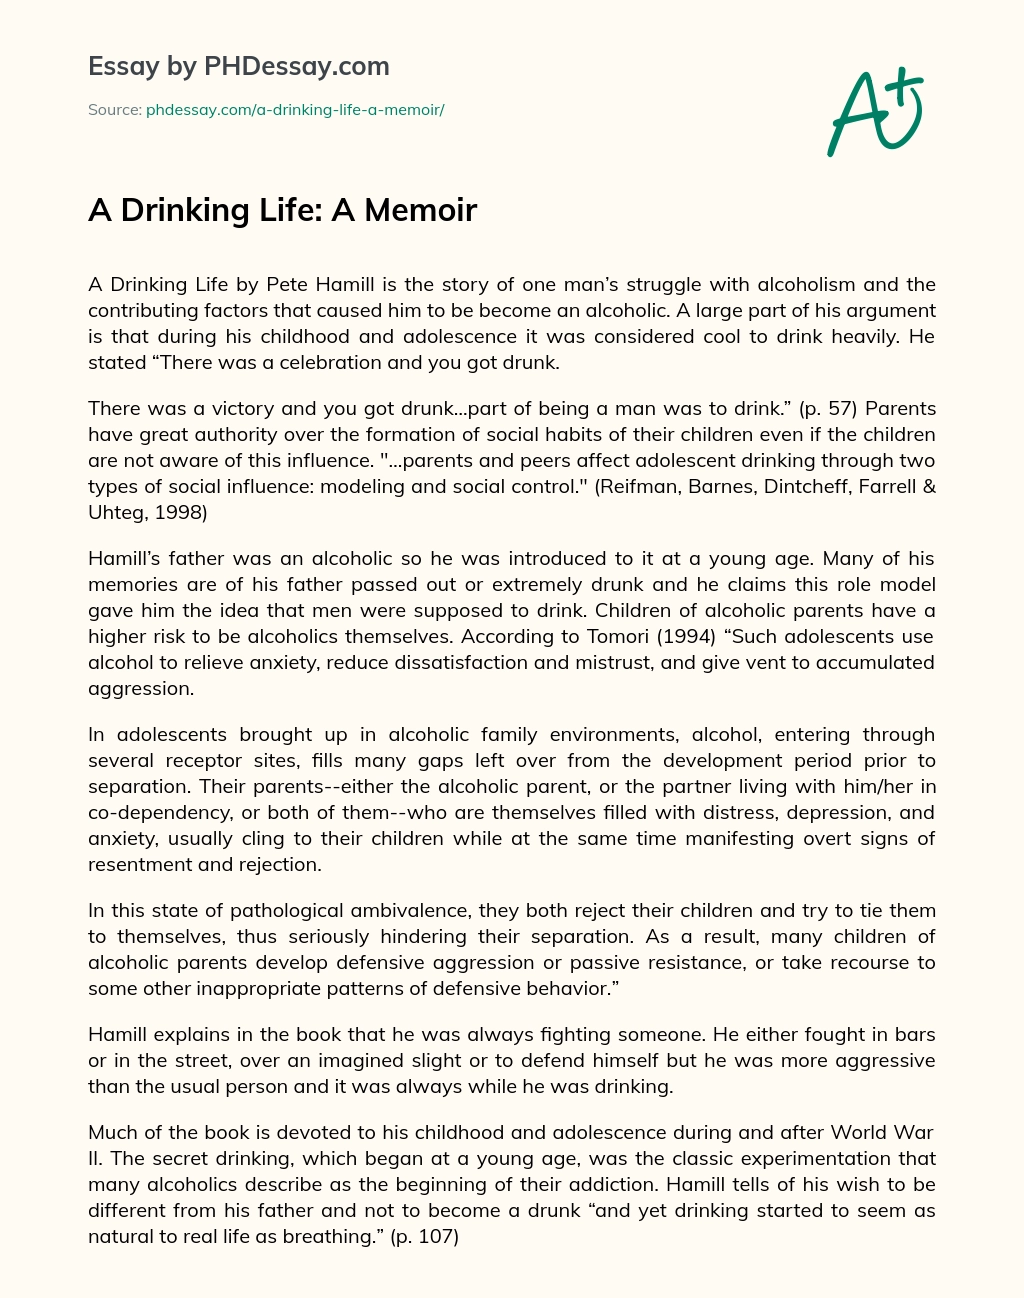 A Drinking Life: A Memoir essay